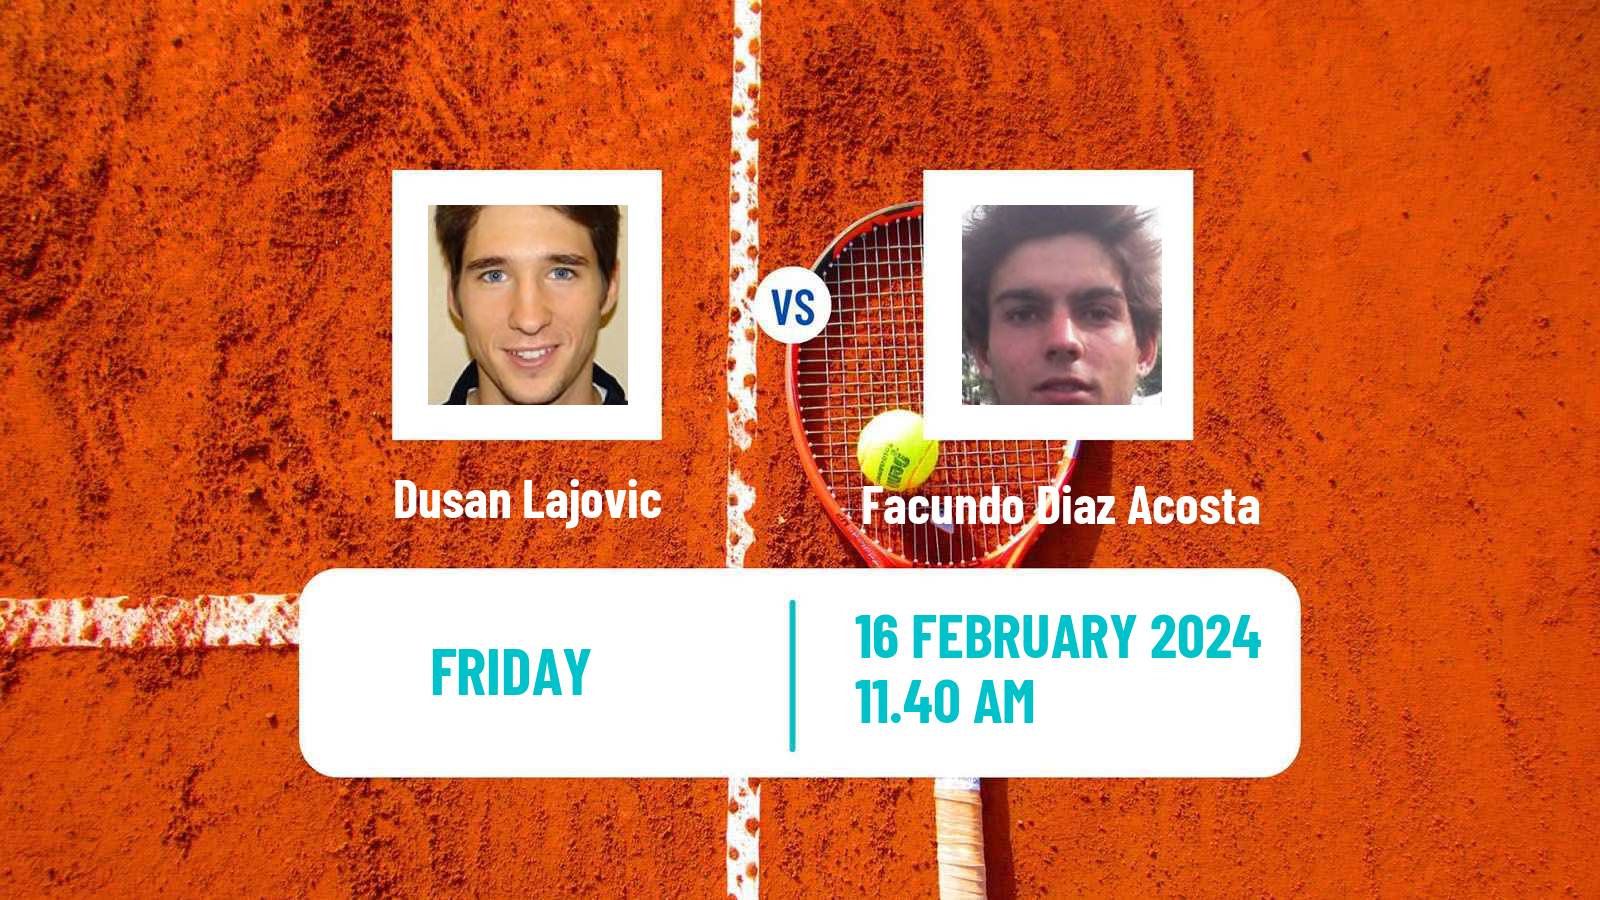 Tennis ATP Buenos Aires Dusan Lajovic - Facundo Diaz Acosta